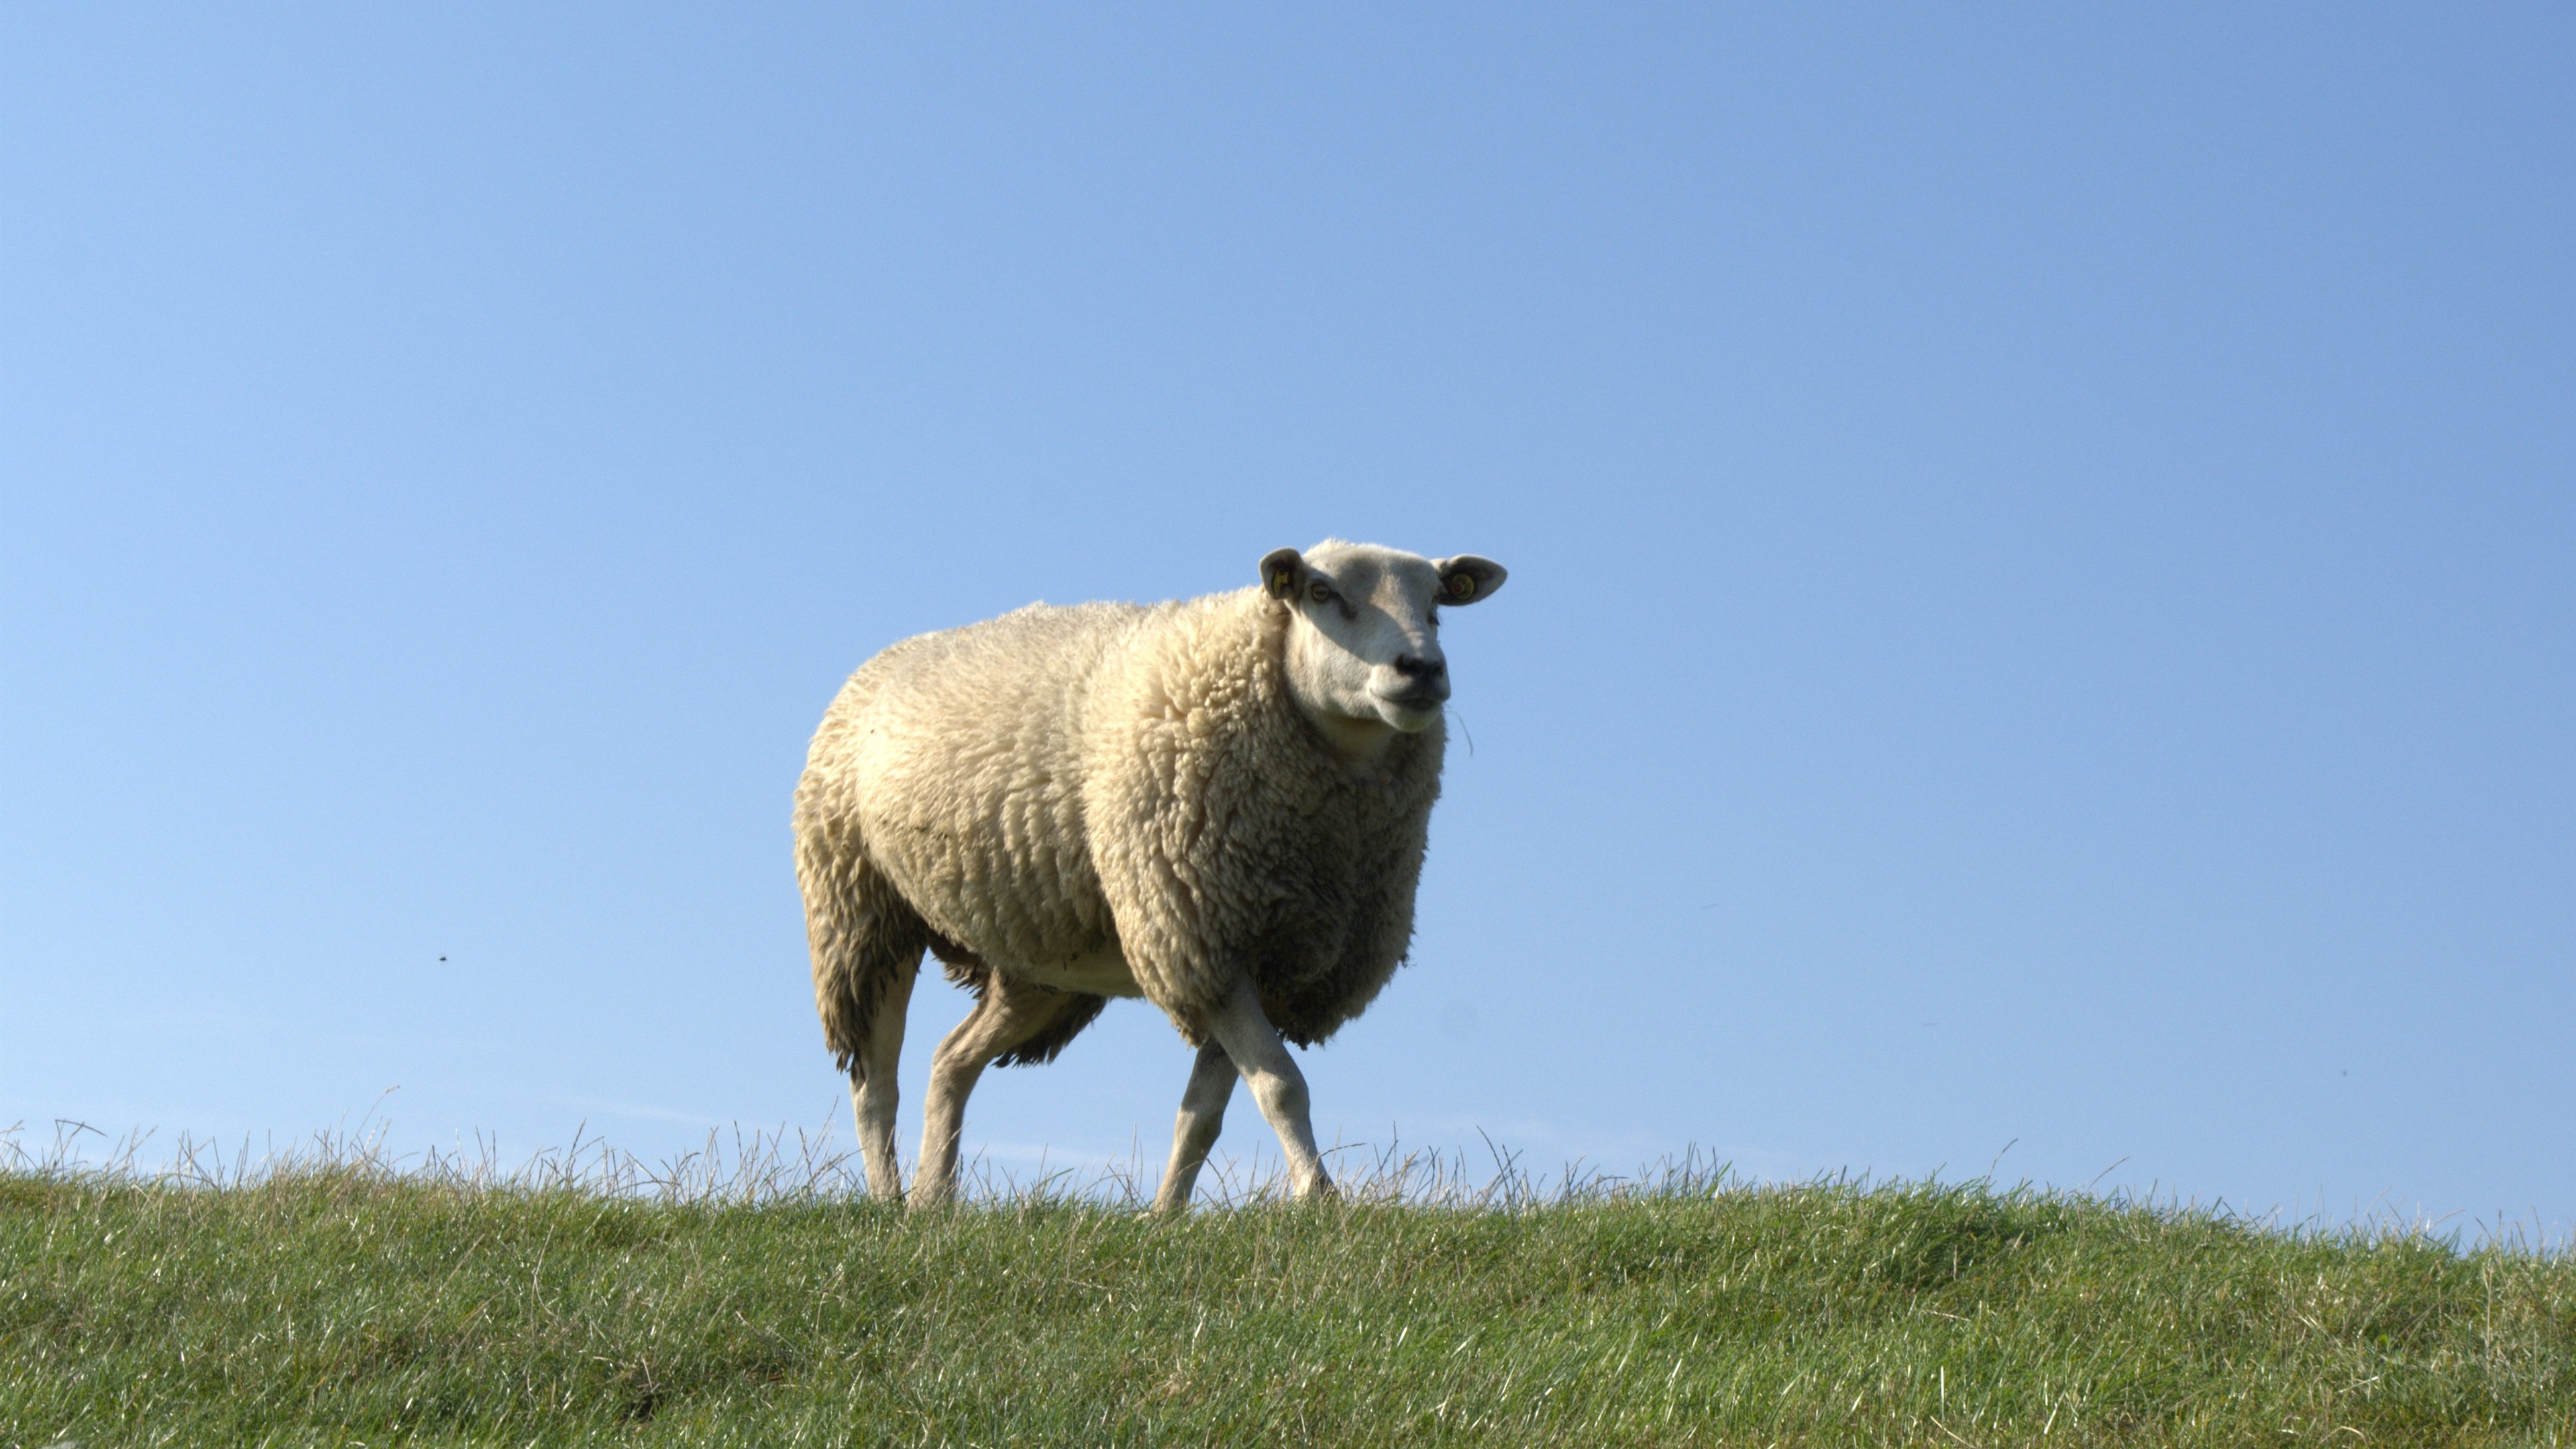 Wallpaper One sheep, walk, grass 3840x2160 UHD 4K Picture, Image